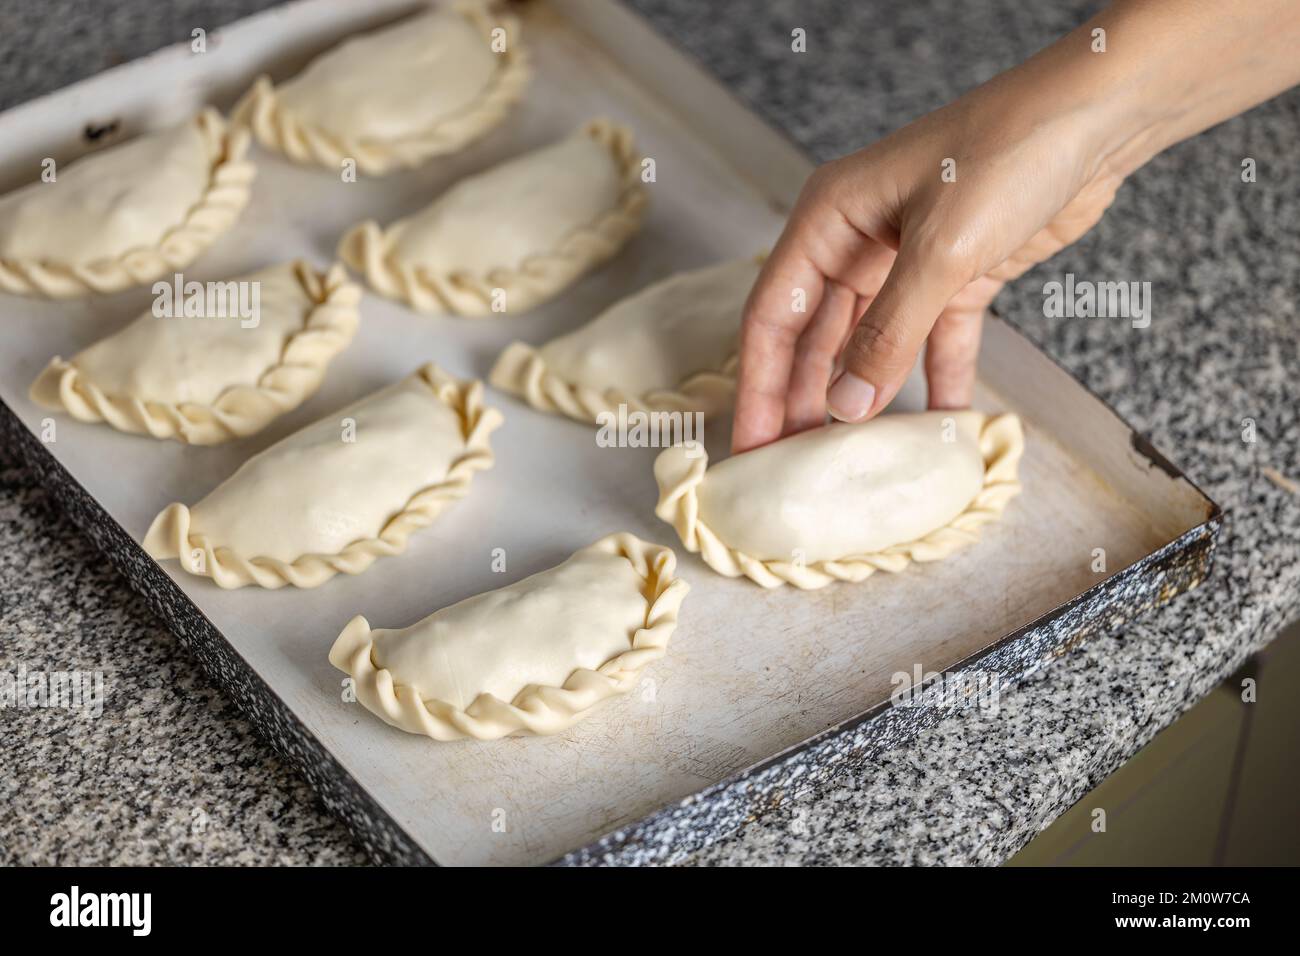 Woman's hands putting Argentine empanadas on a platter. Stock Photo